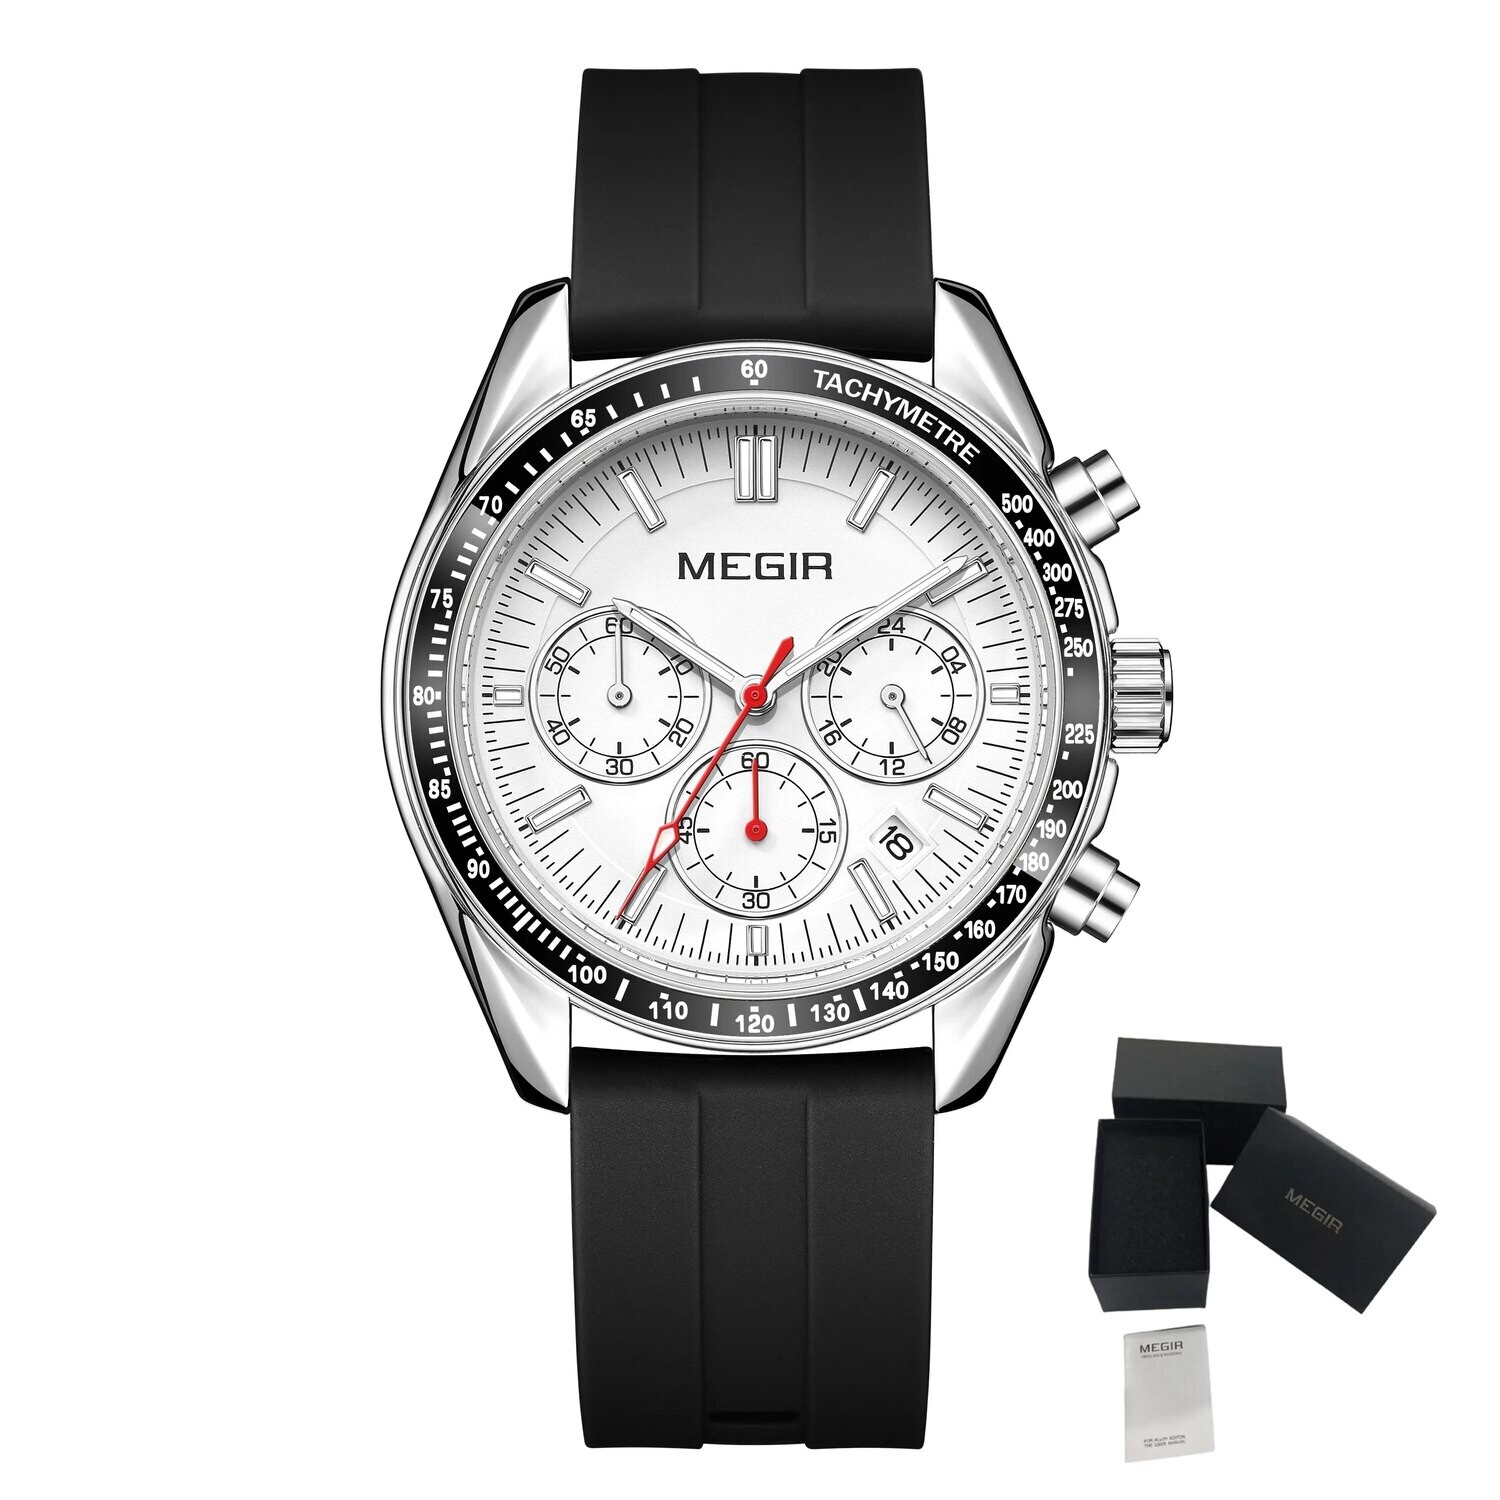 MEGIR Analog Quartz Wrist Watch Chronograph Luminous Business Sport Watches with Silicone Strap Calendar Man Clock reloj hombre